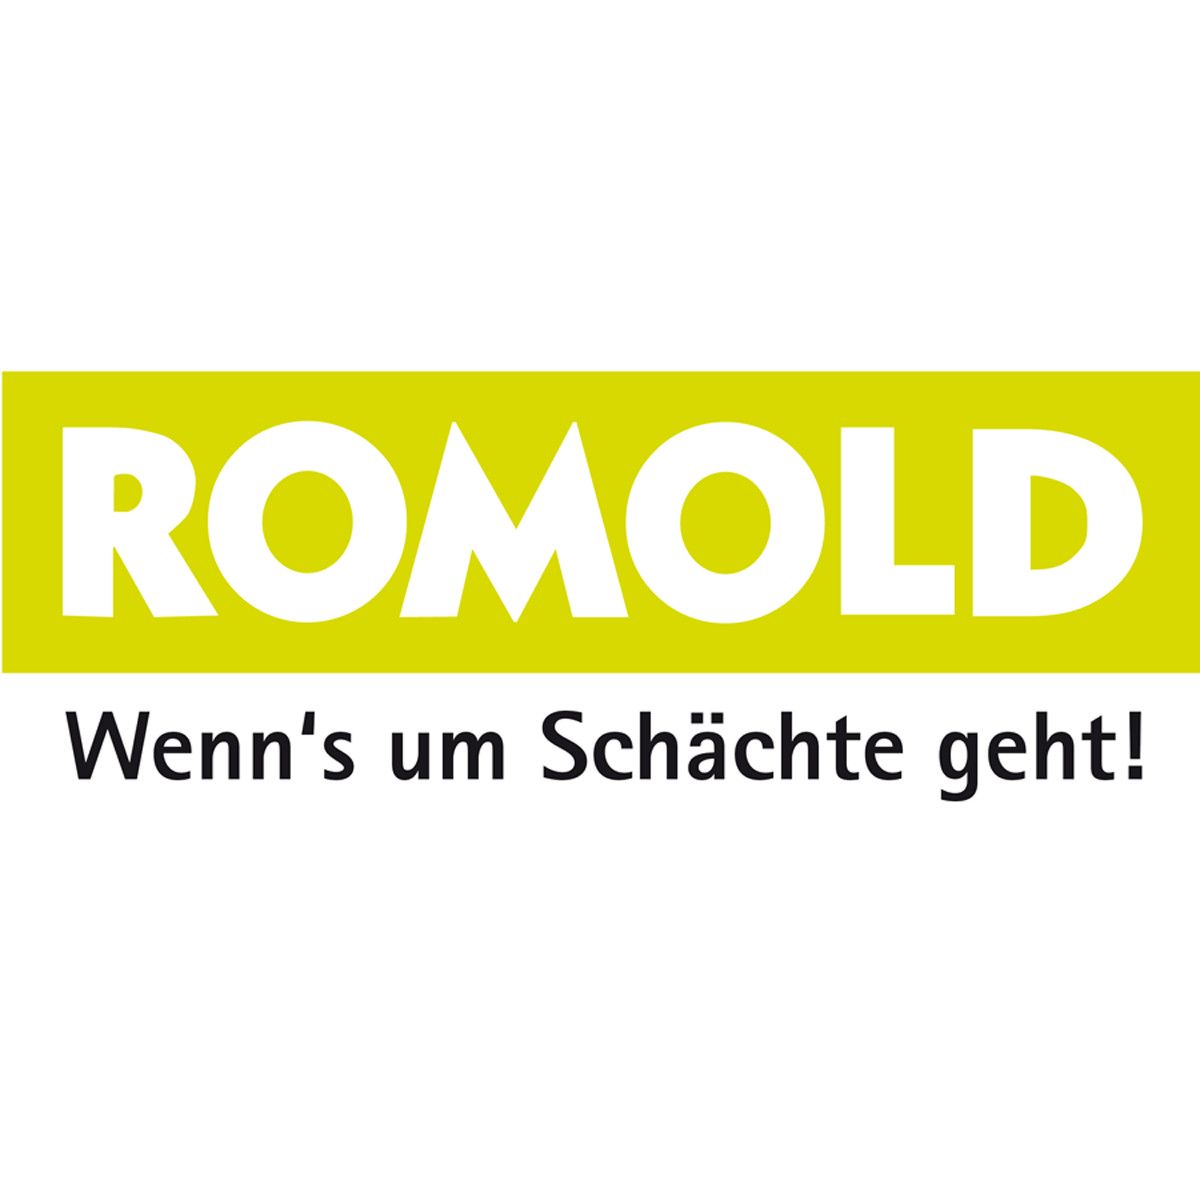 ROMOLD GmbH